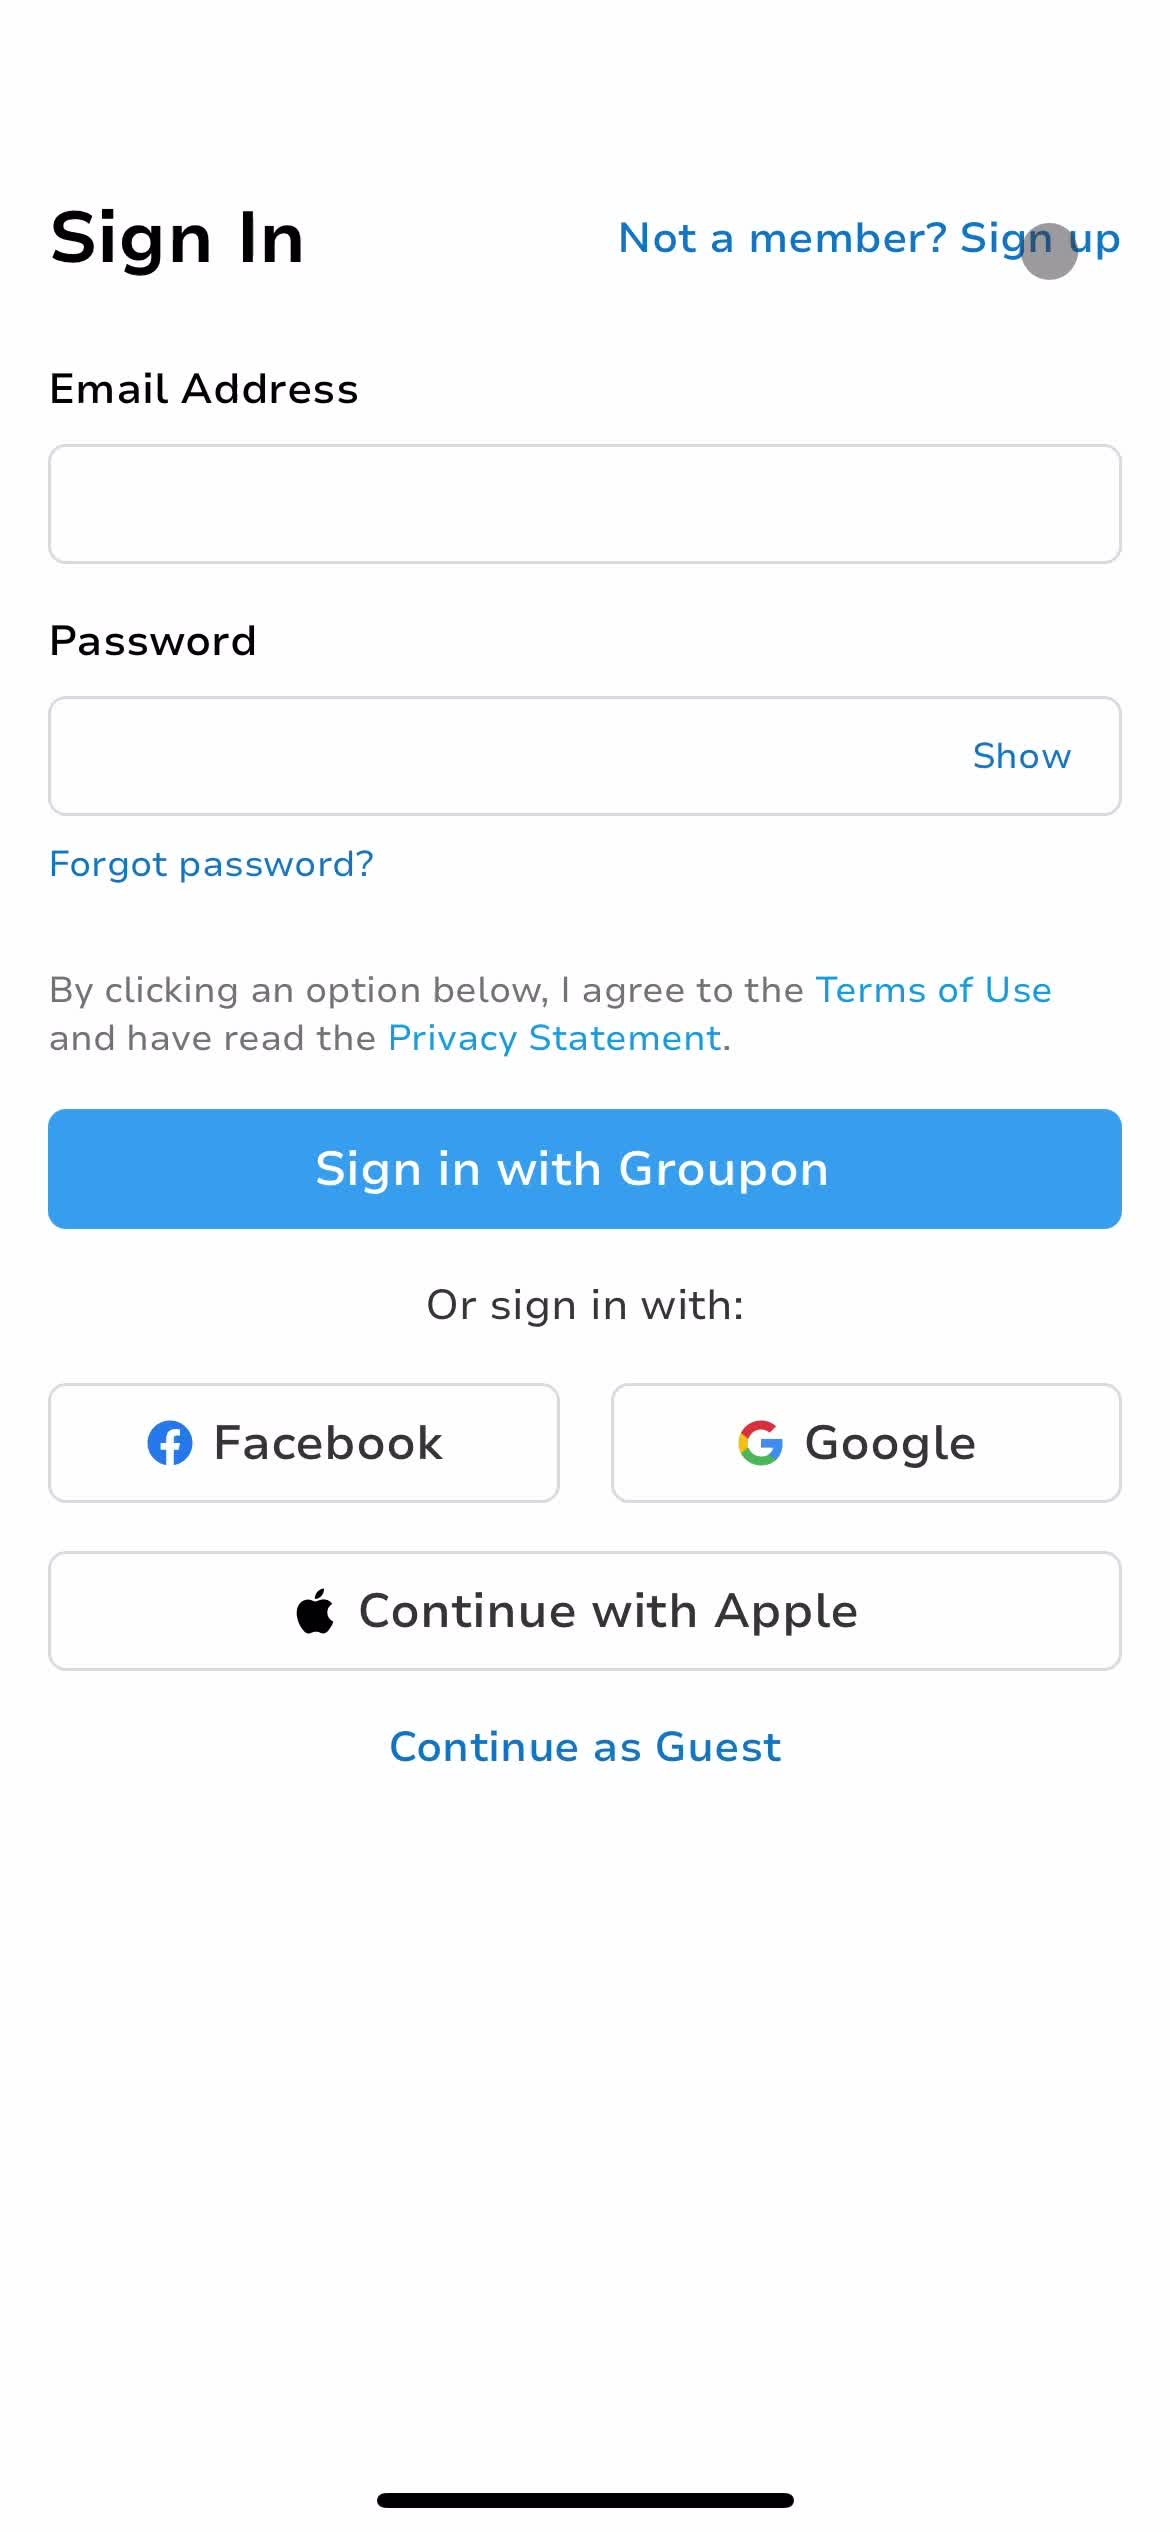 Groupon sign in screenshot